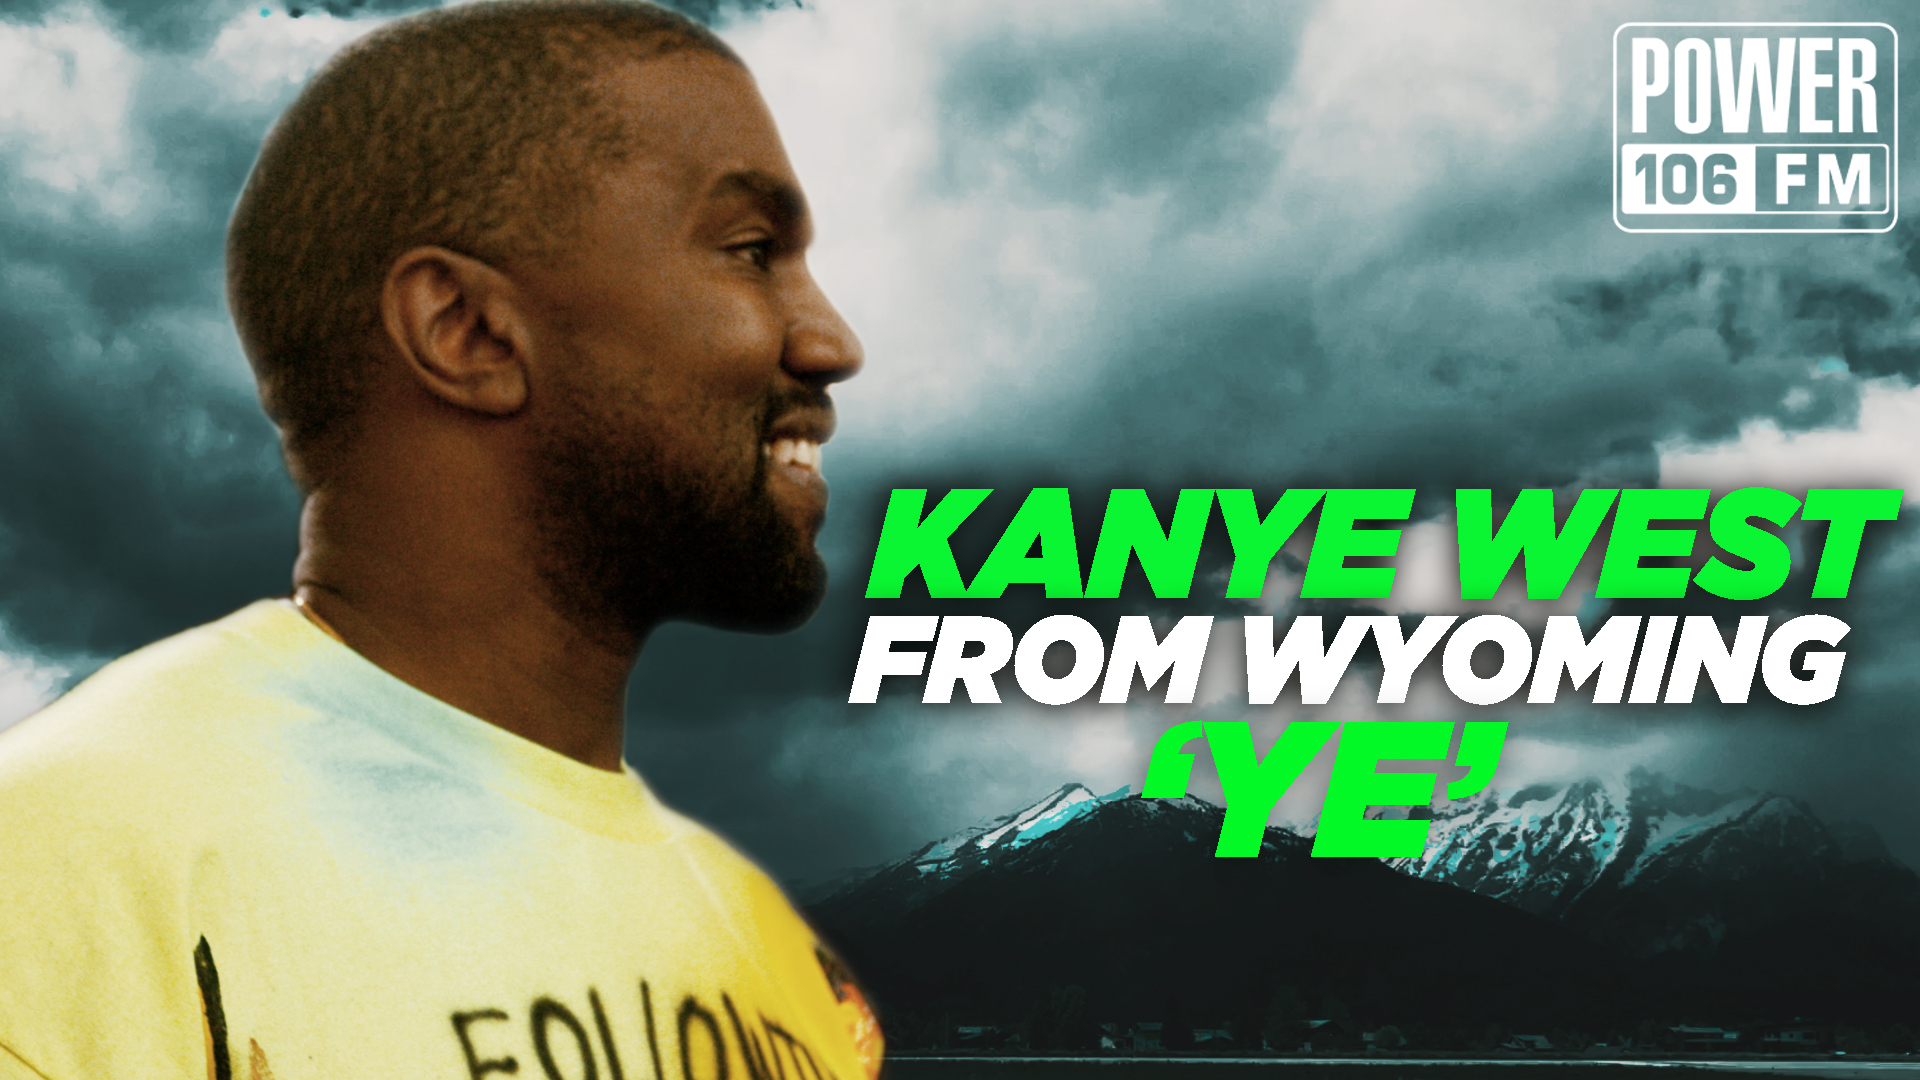 Kanye West Says He Remade His ‘Ye’ Album After TMZ Interview & More W/ J. Cruz, Felli Fel & Cece Valencia [WATCH]